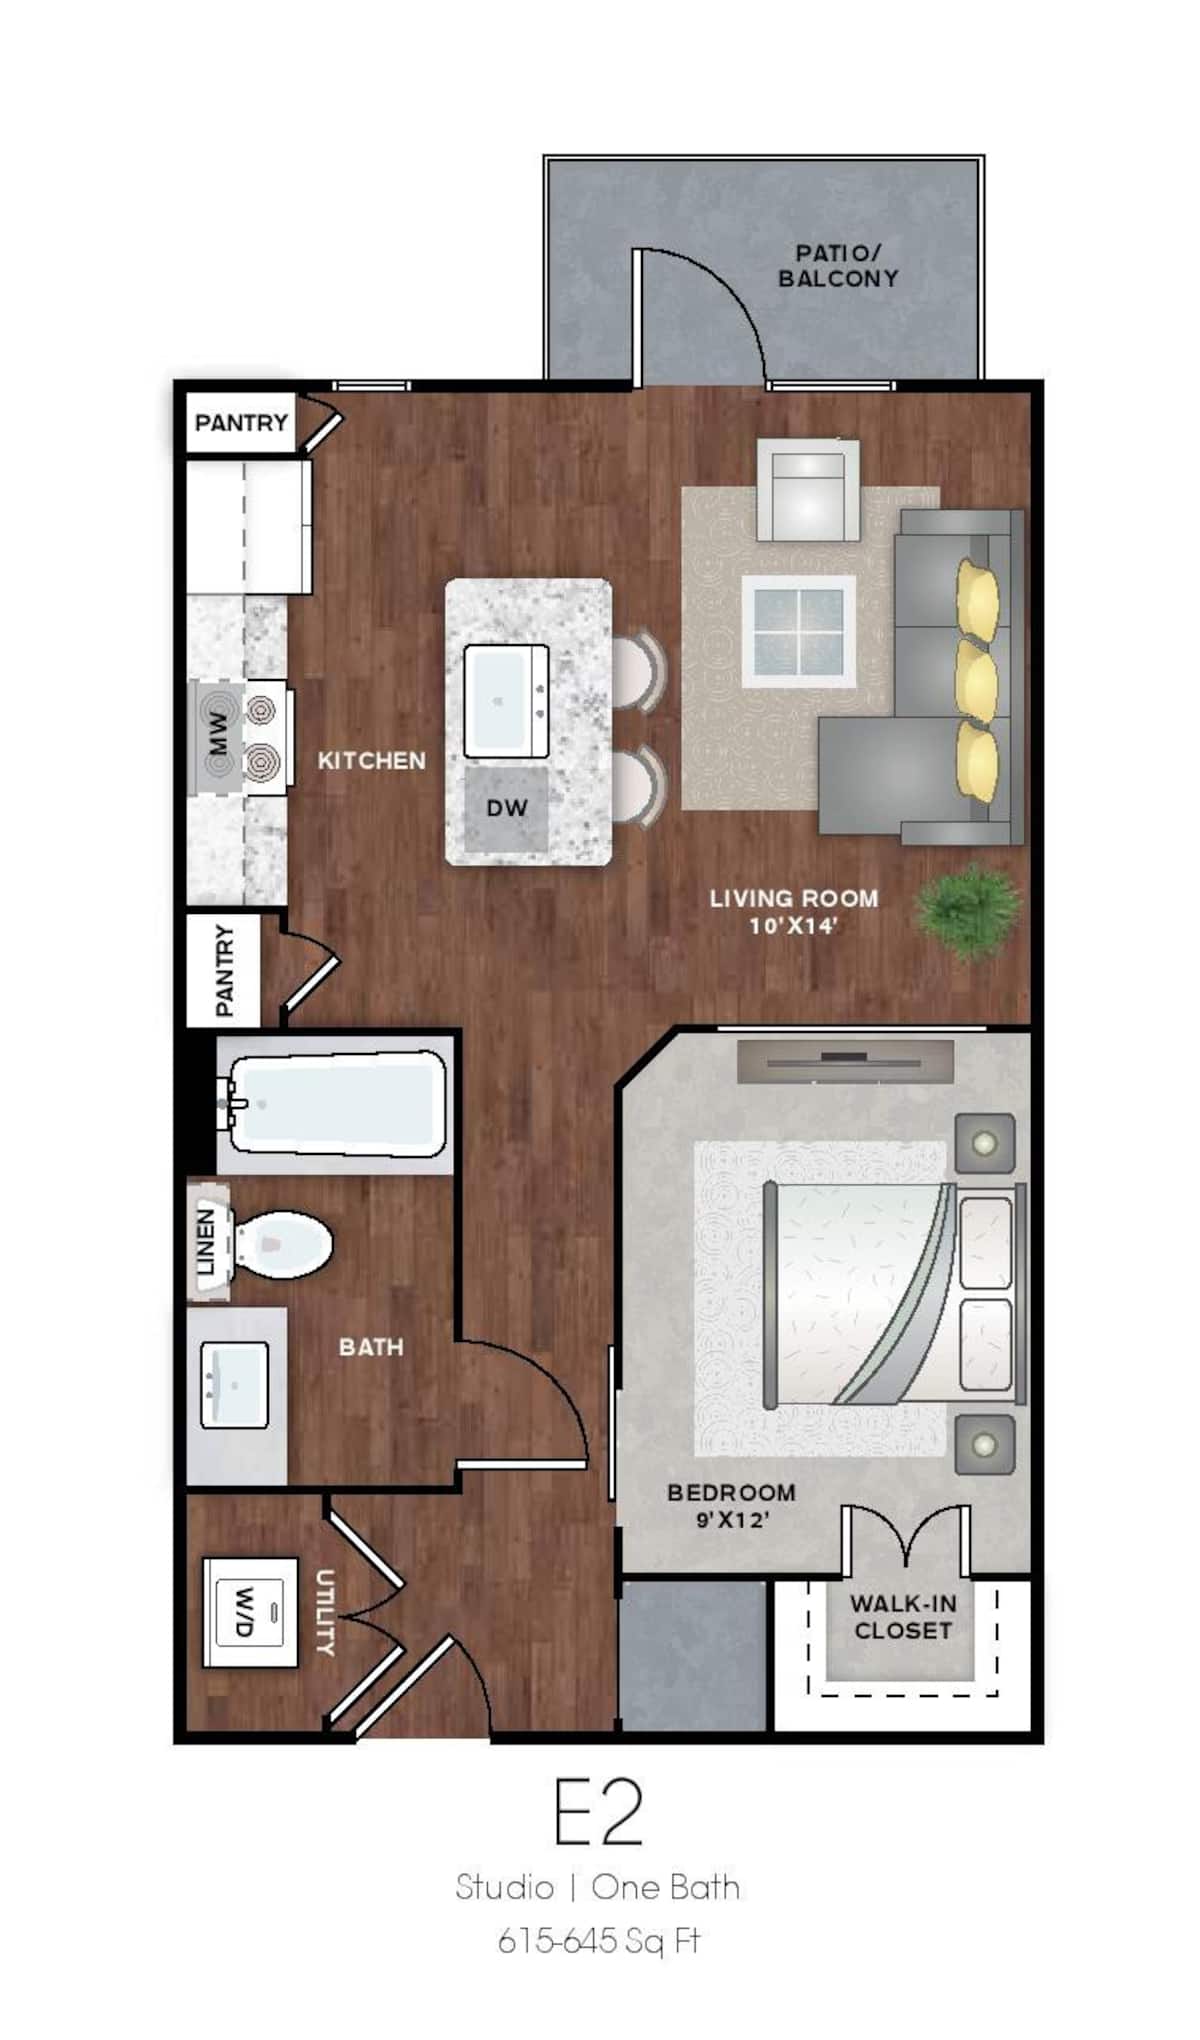 Floorplan diagram for E2, showing 1 bedroom